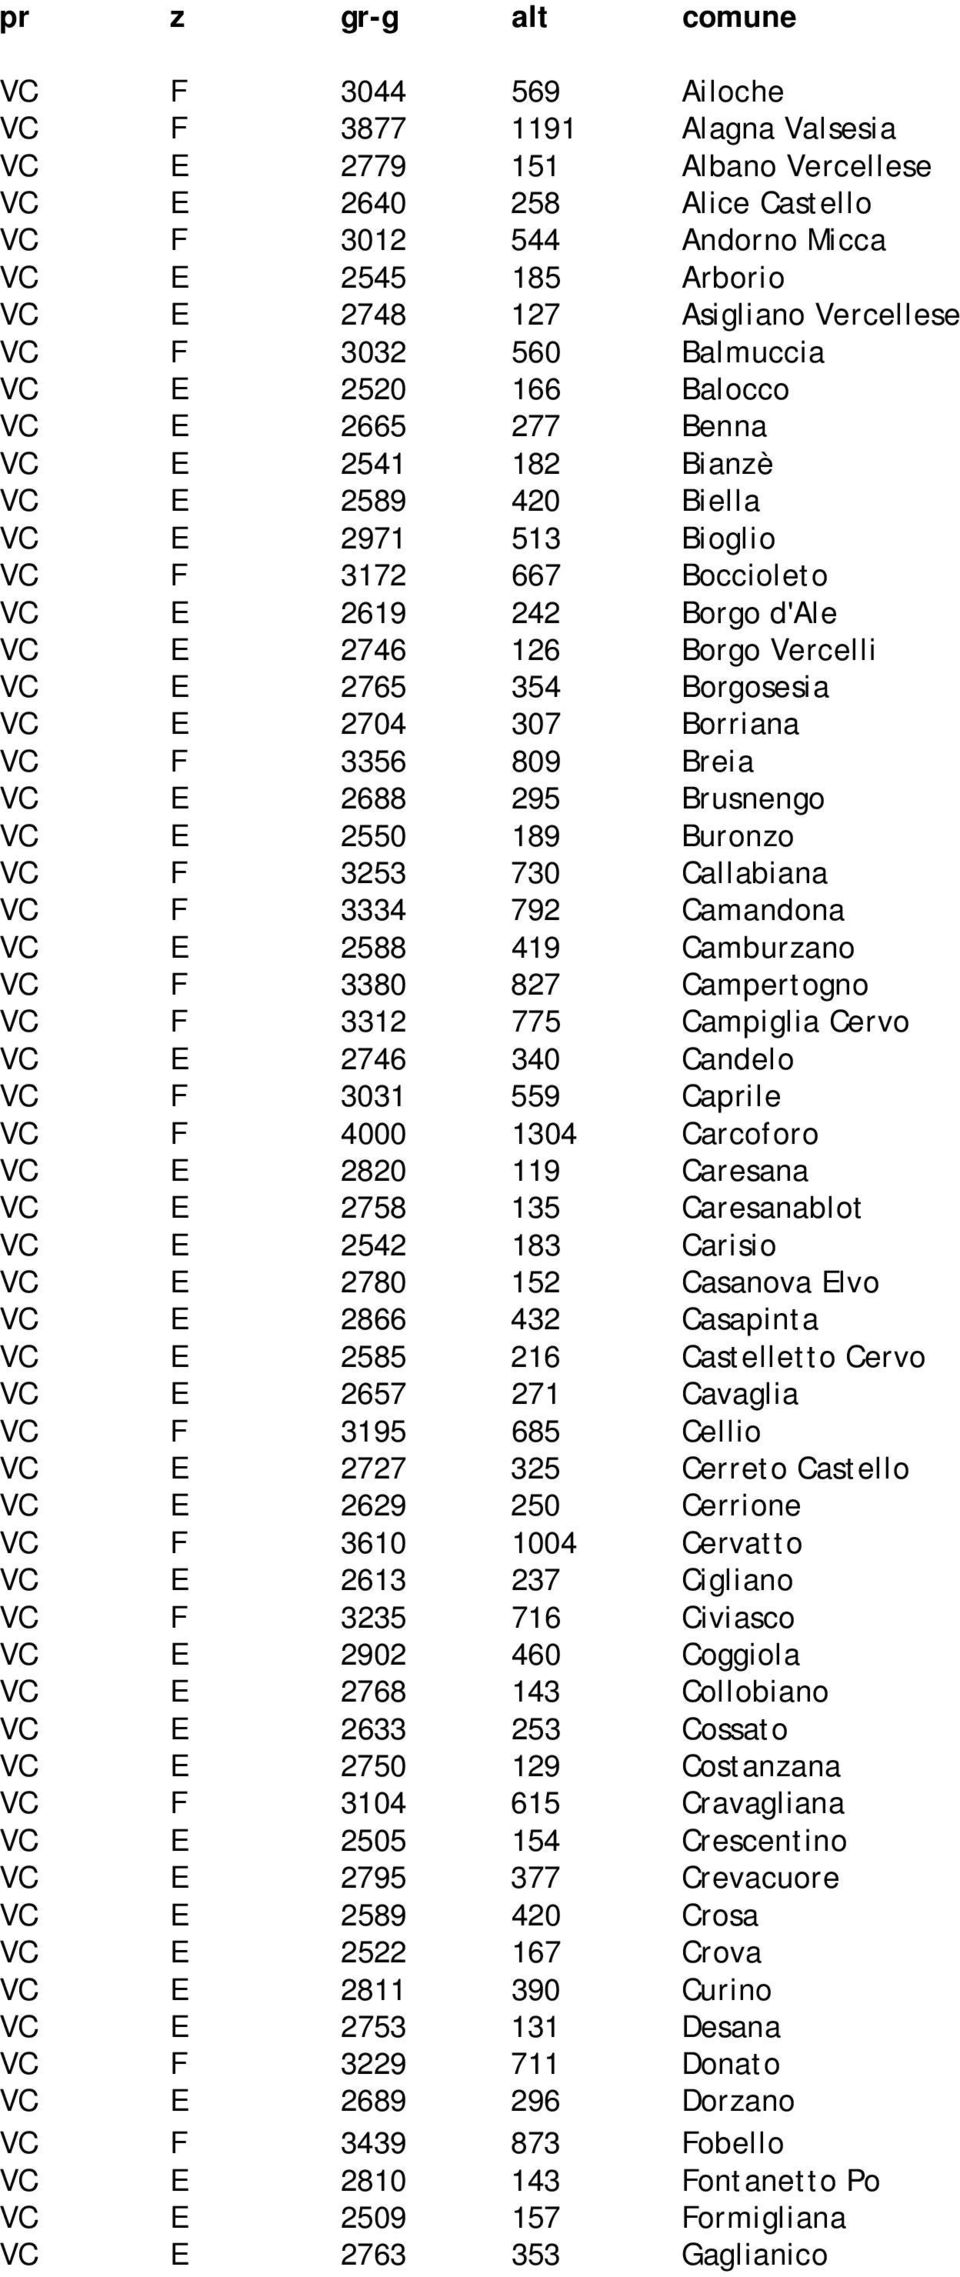 Borgo Vercelli VC E 2765 354 Borgosesia VC E 2704 307 Borriana VC F 3356 809 Breia VC E 2688 295 Brusnengo VC E 2550 189 Buronzo VC F 3253 730 Callabiana VC F 3334 792 Camandona VC E 2588 419